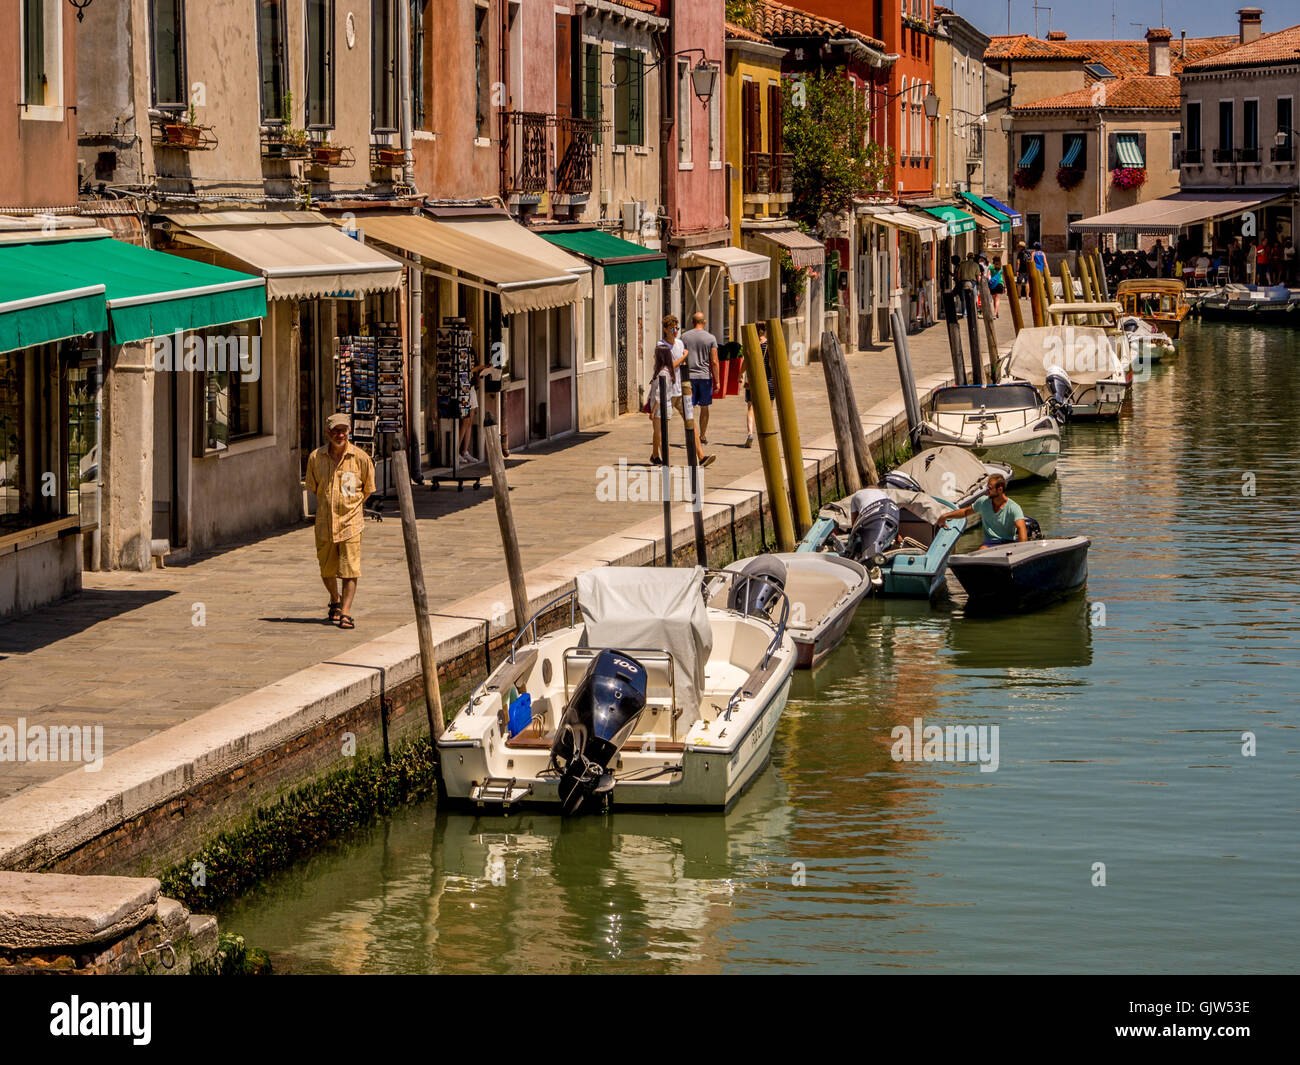 Fondamenta dei Vetrai le long du canal. Murano, Italie. Banque D'Images